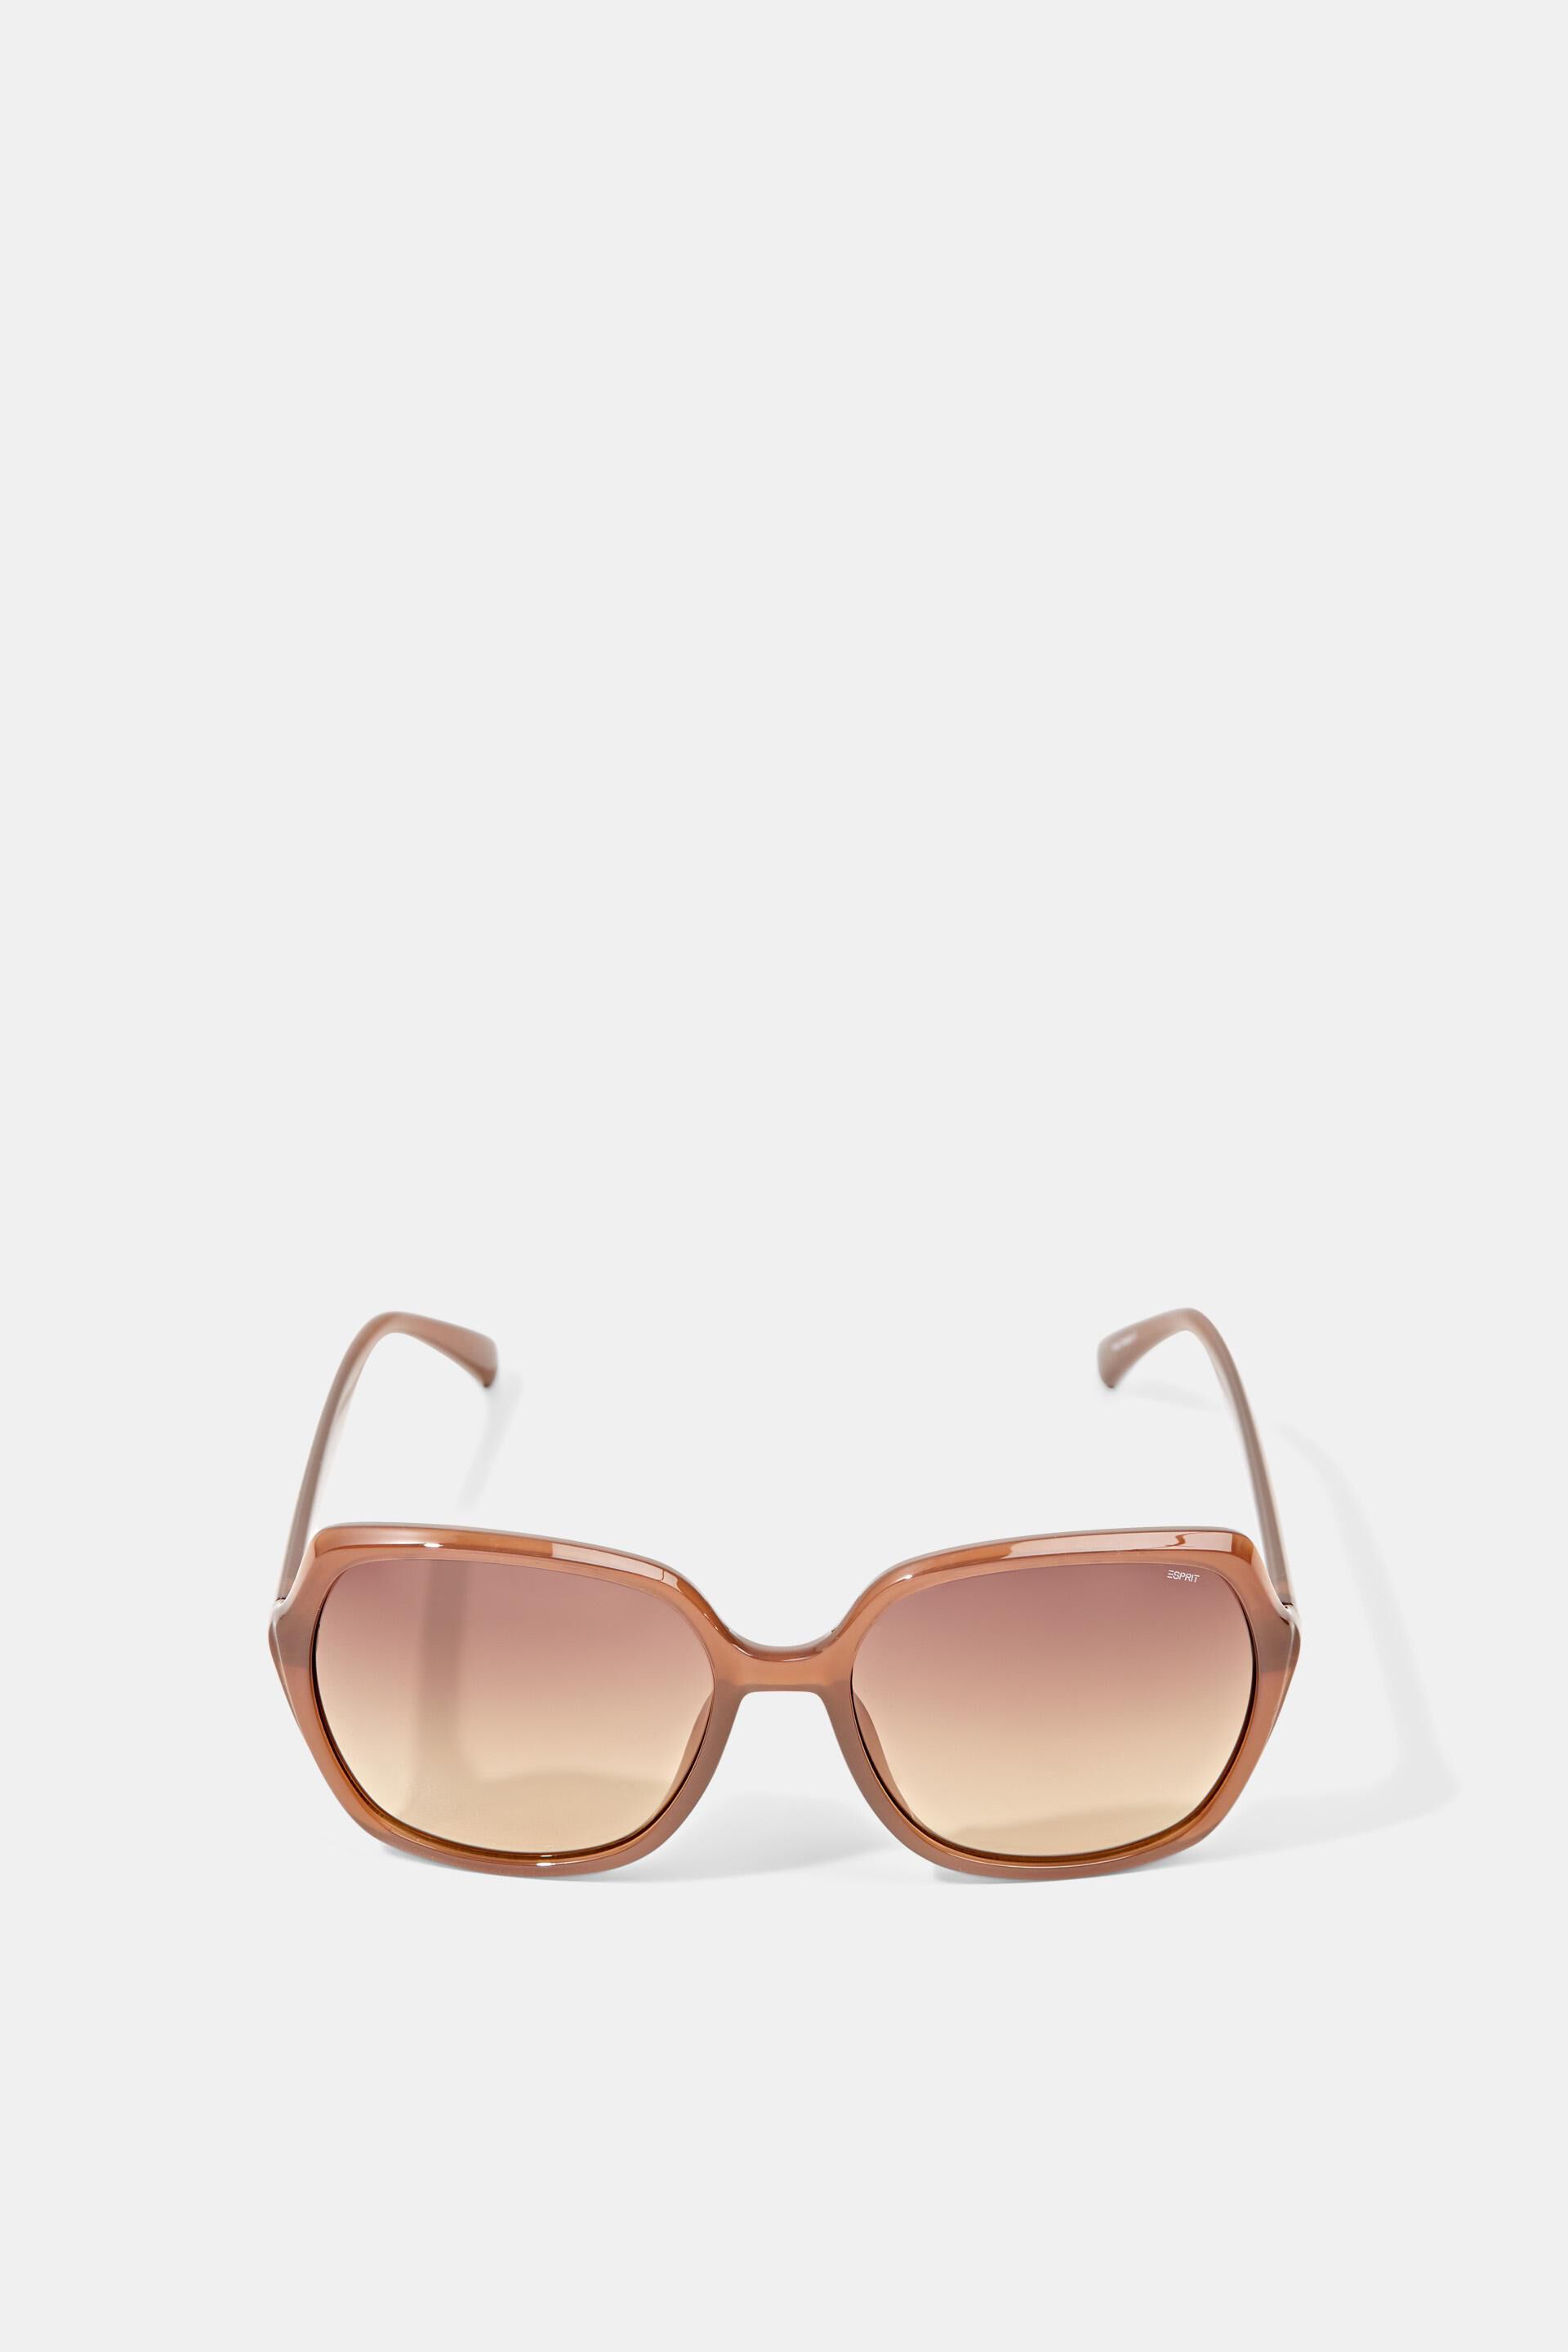 Esprit with Statement lenses large sunglasses